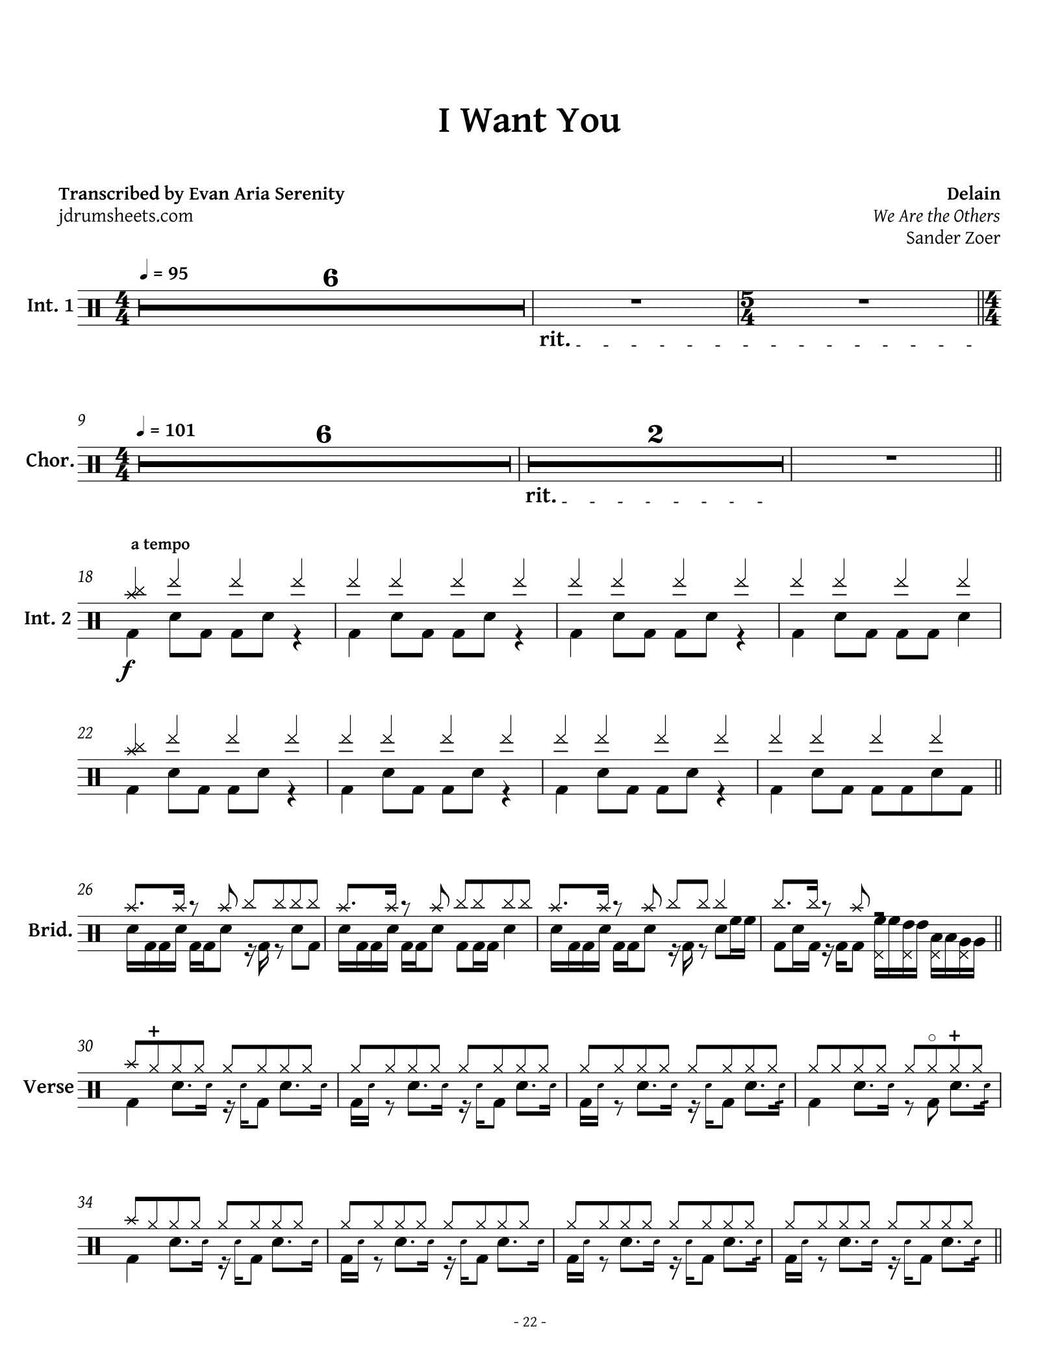 I Want You - Delain - Full Drum Transcription / Drum Sheet Music - Jaslow Drum Sheets